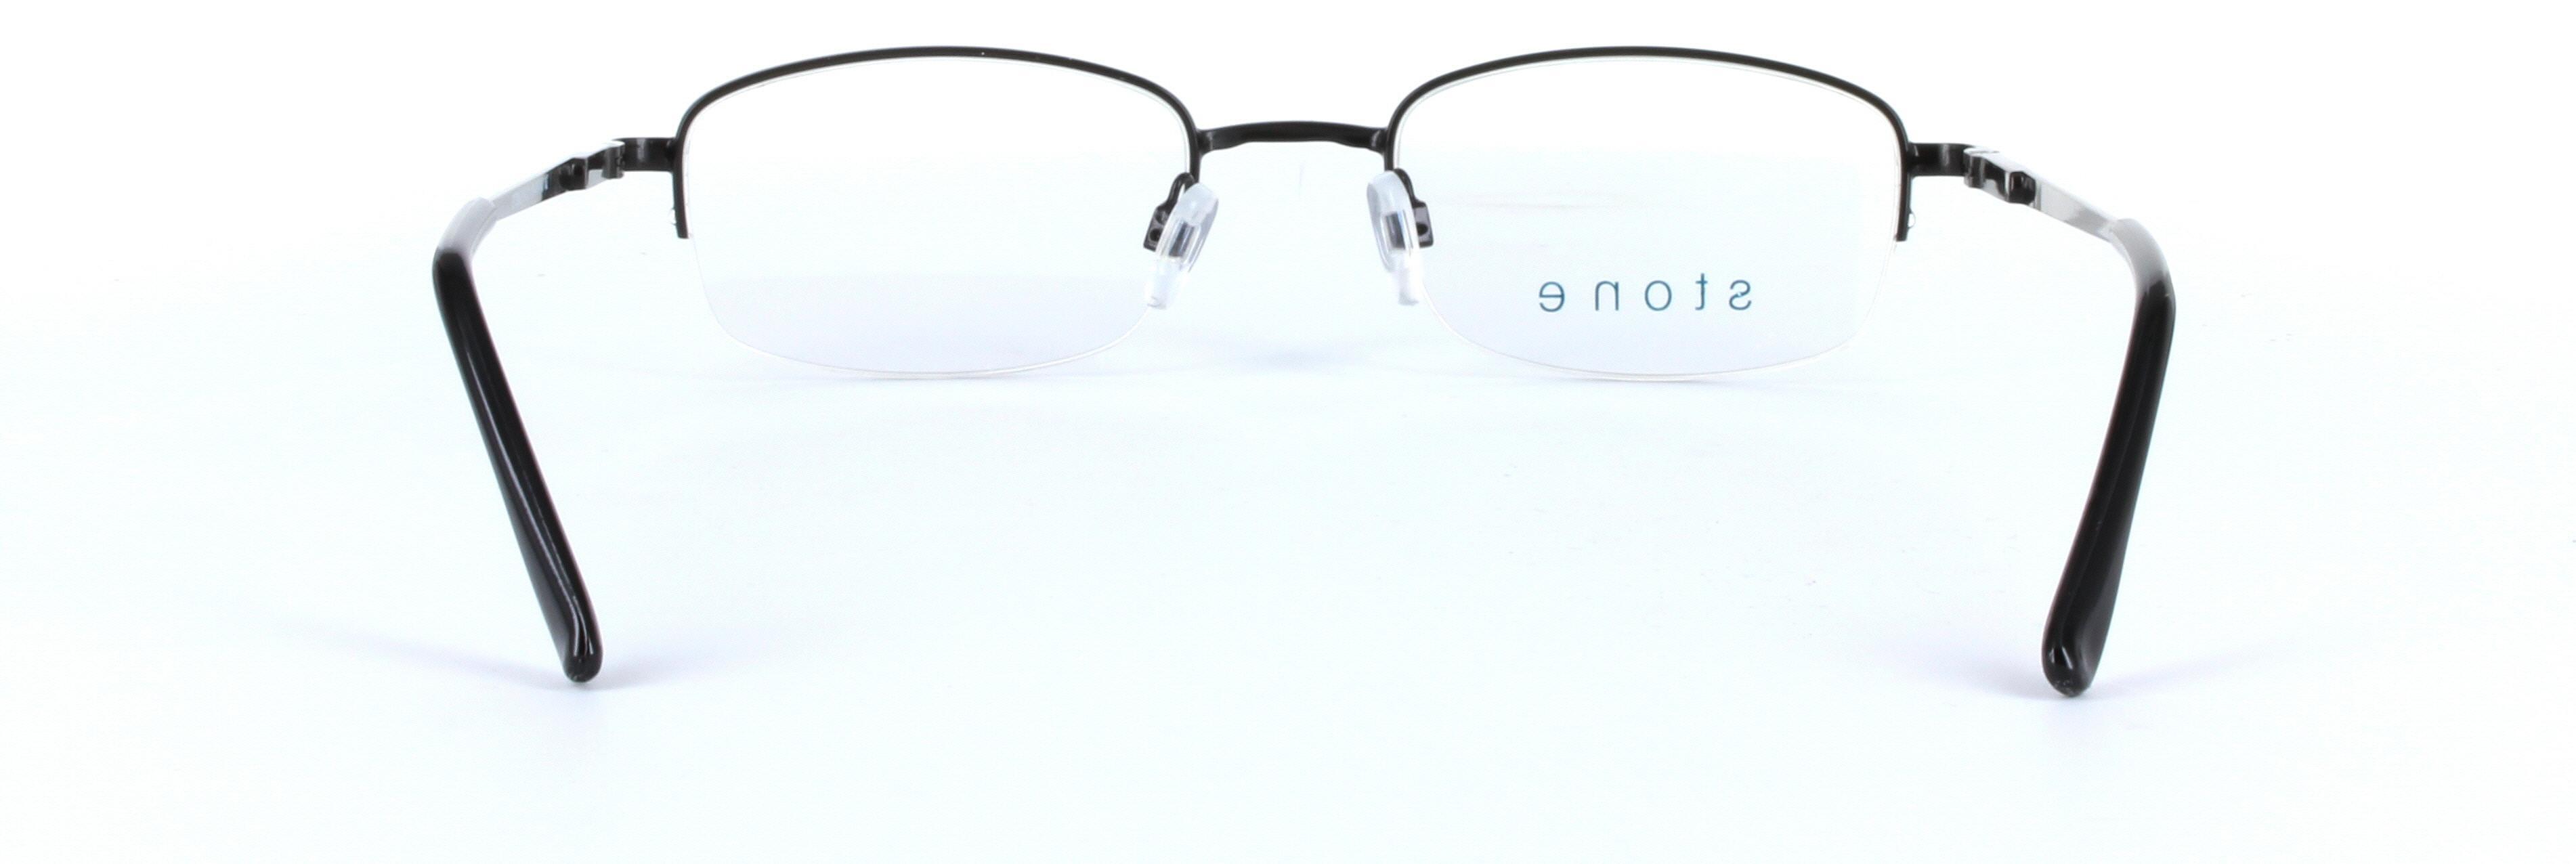 Harry Black Semi Rimless Rectangular Metal Glasses - Image View 3